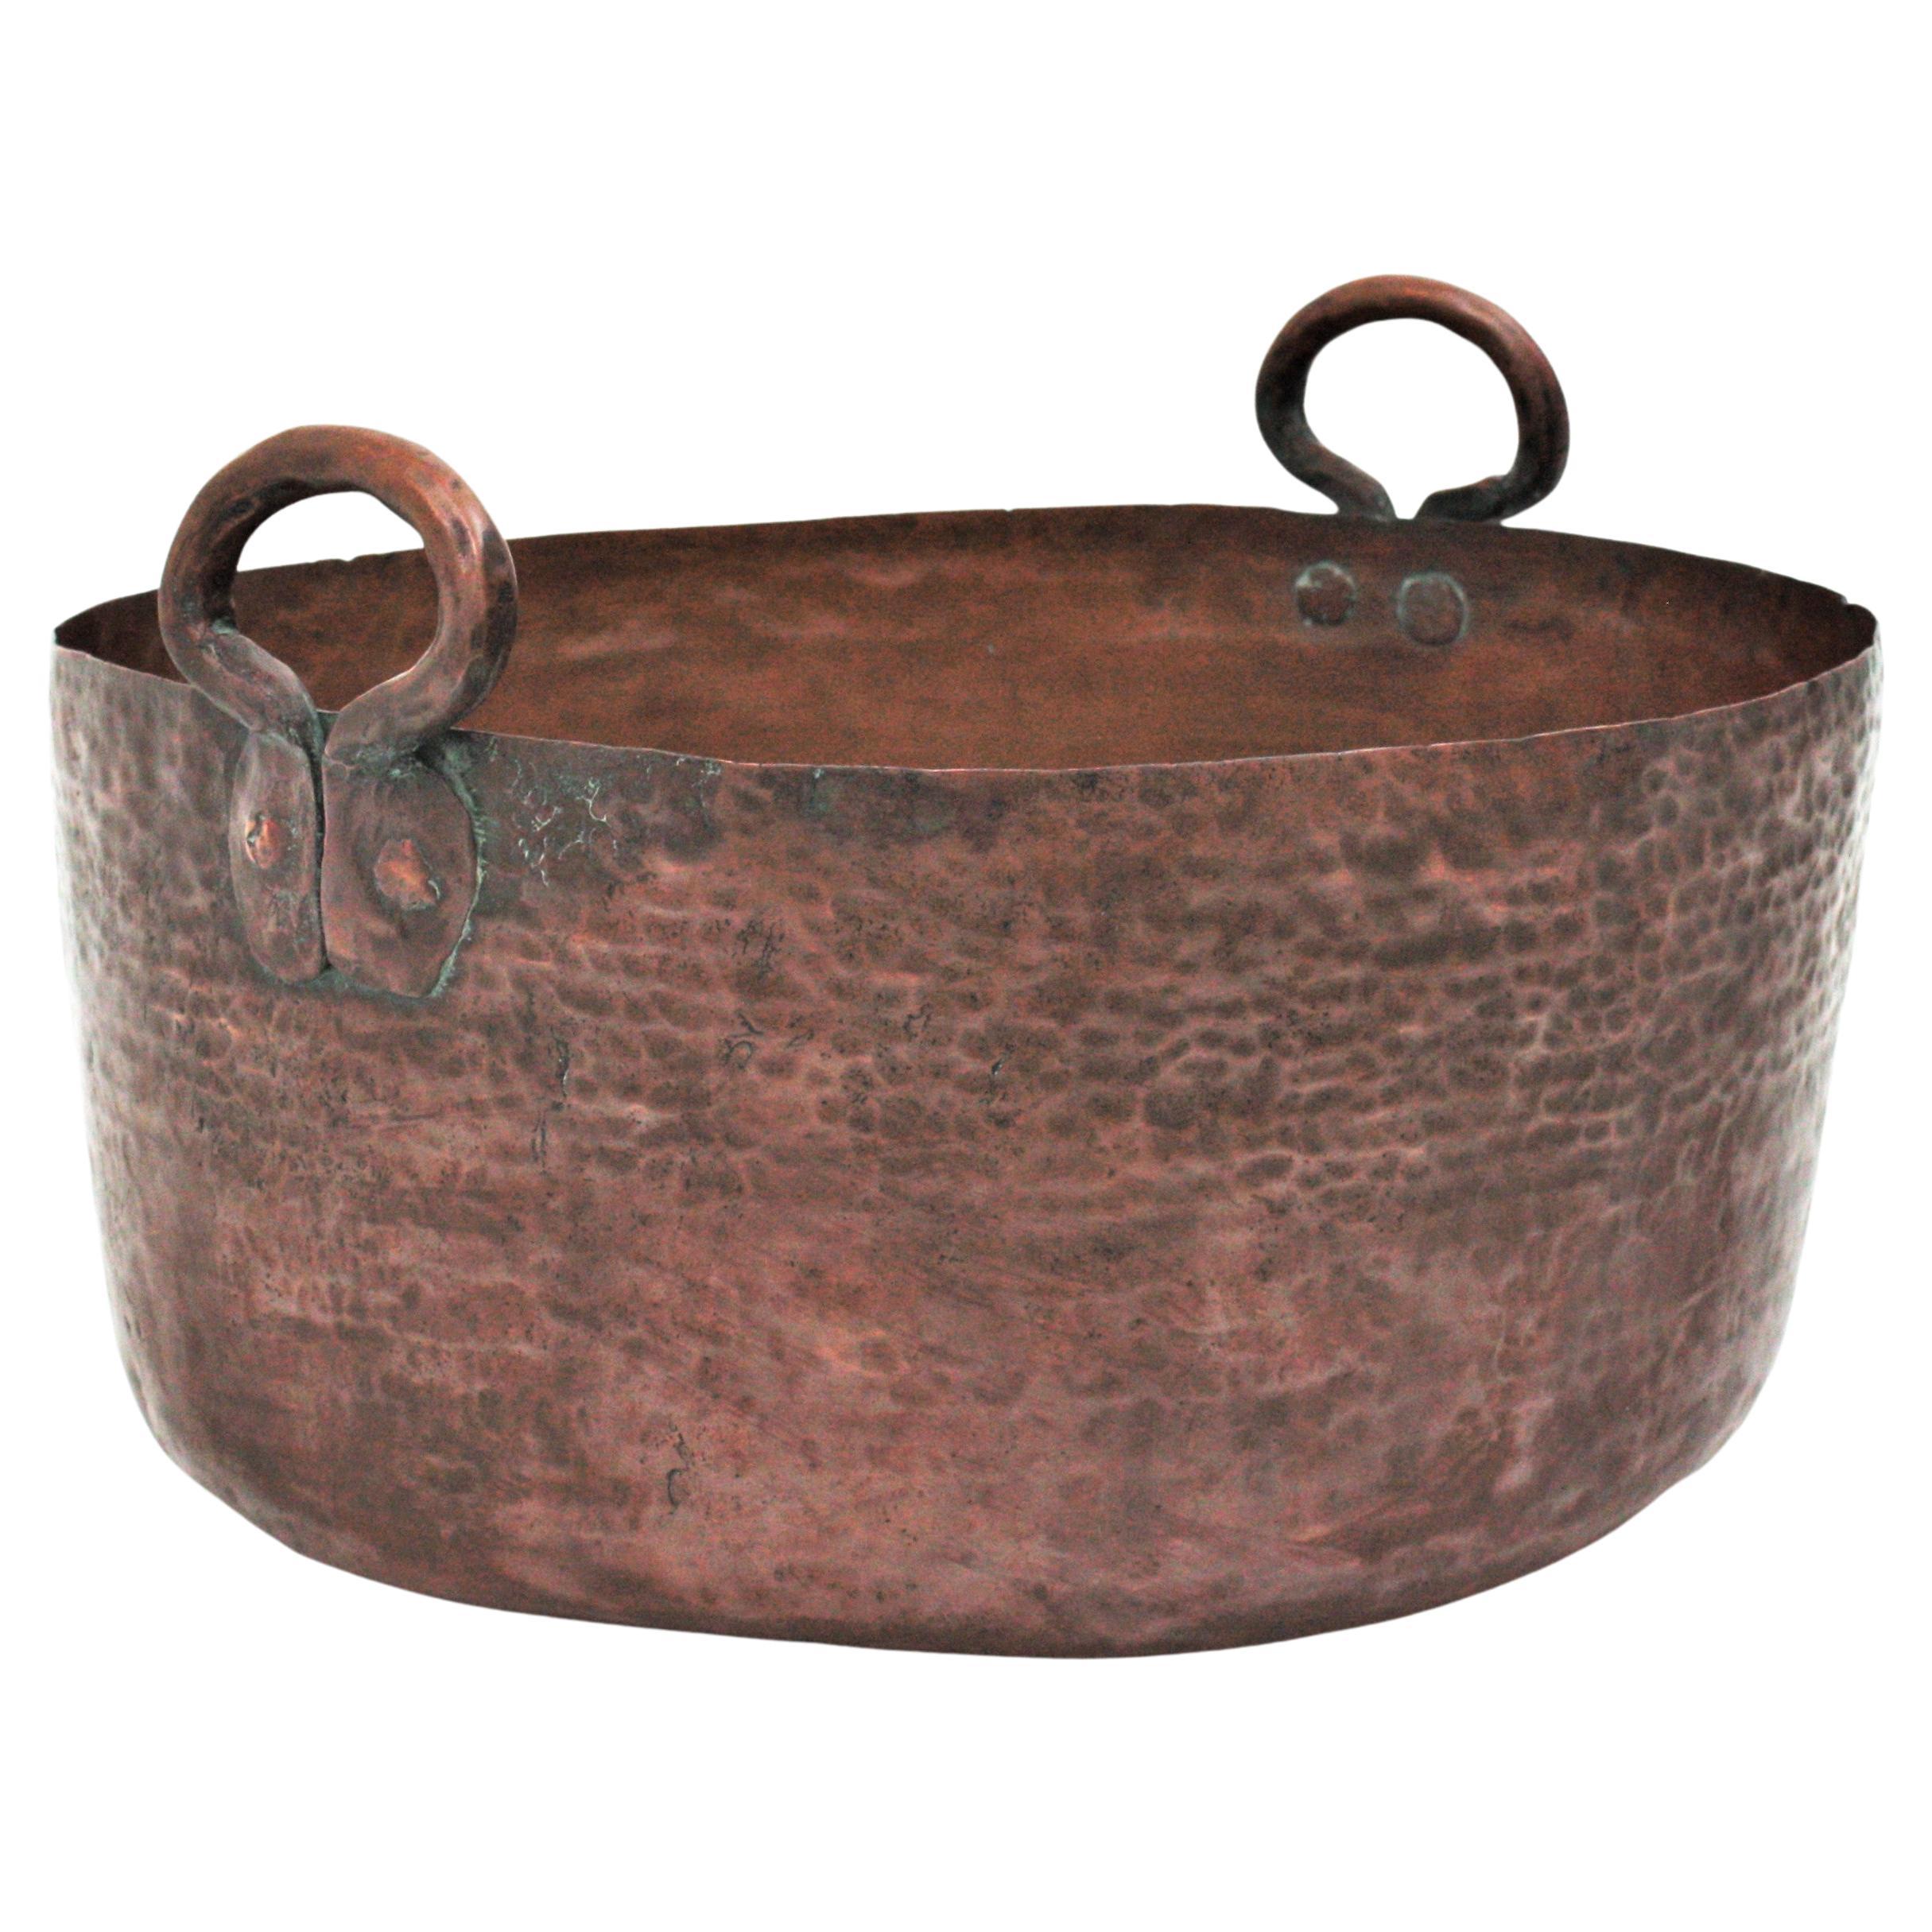 Massive Spanish Copper Cauldron with Handles